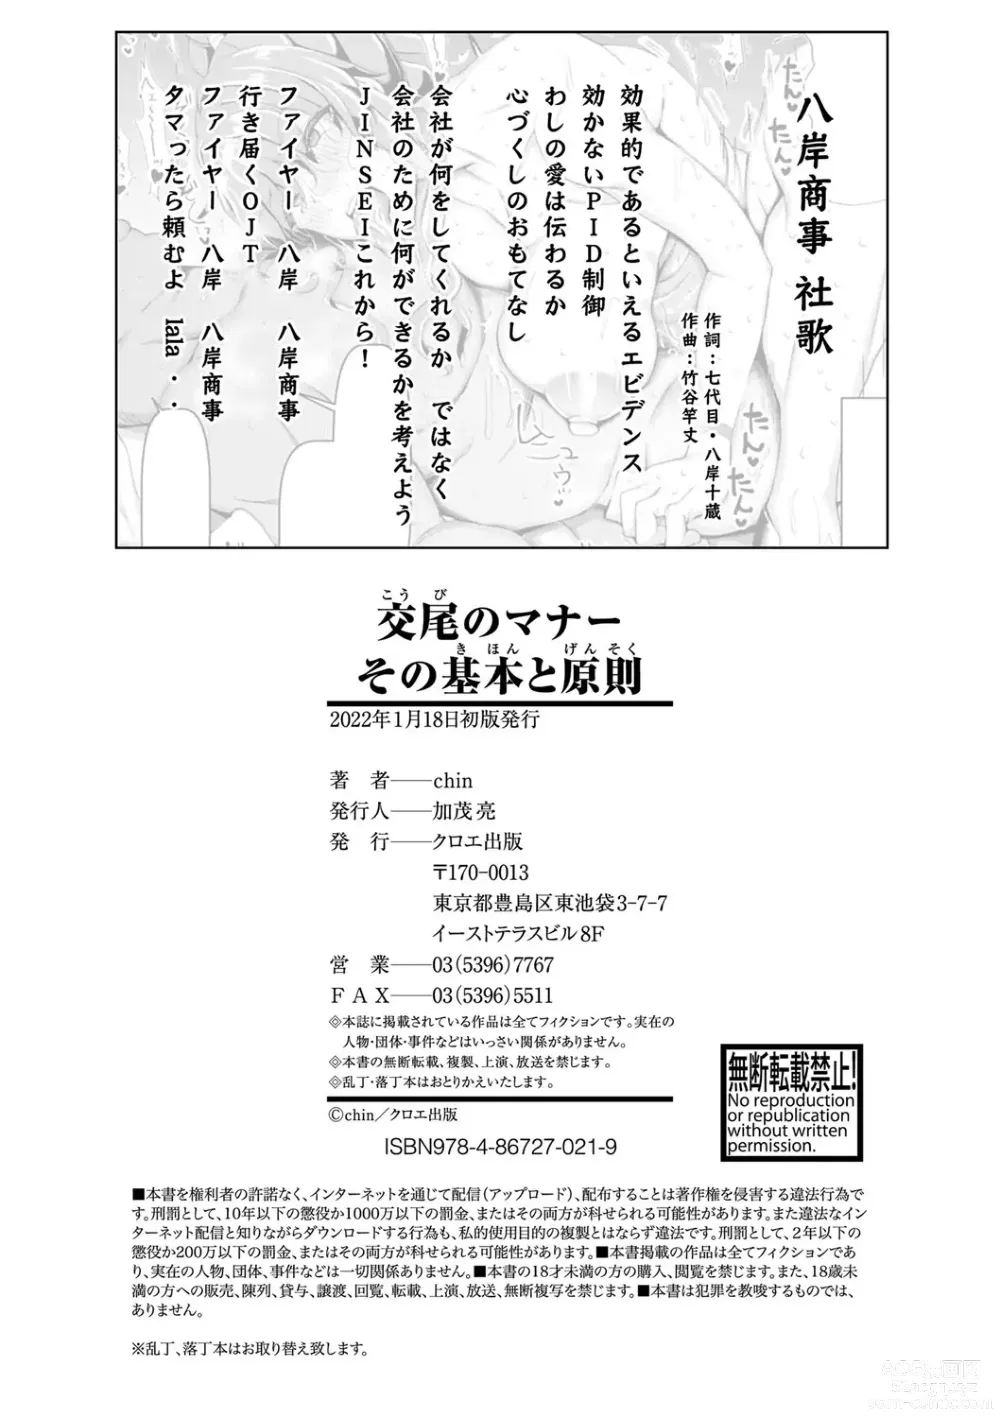 Page 201 of manga Koubi no Manner Sono Kihon to Gensoku - Manners in Koubi, and its basics and principles